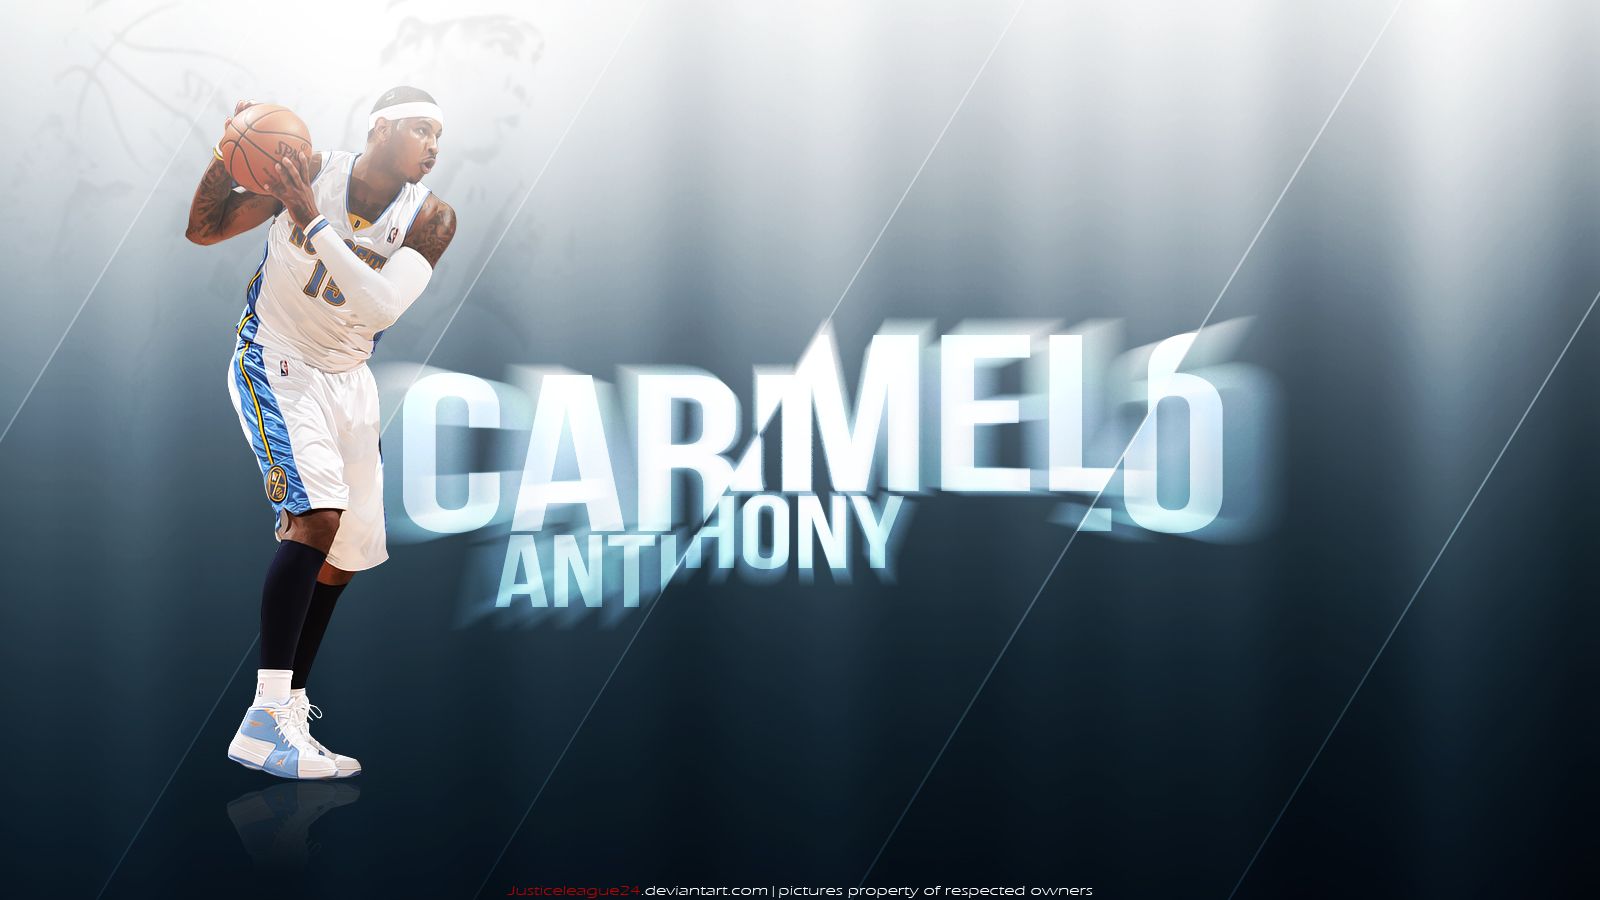 HD wallpaper, Carmelo, Wallpaper, Anthony